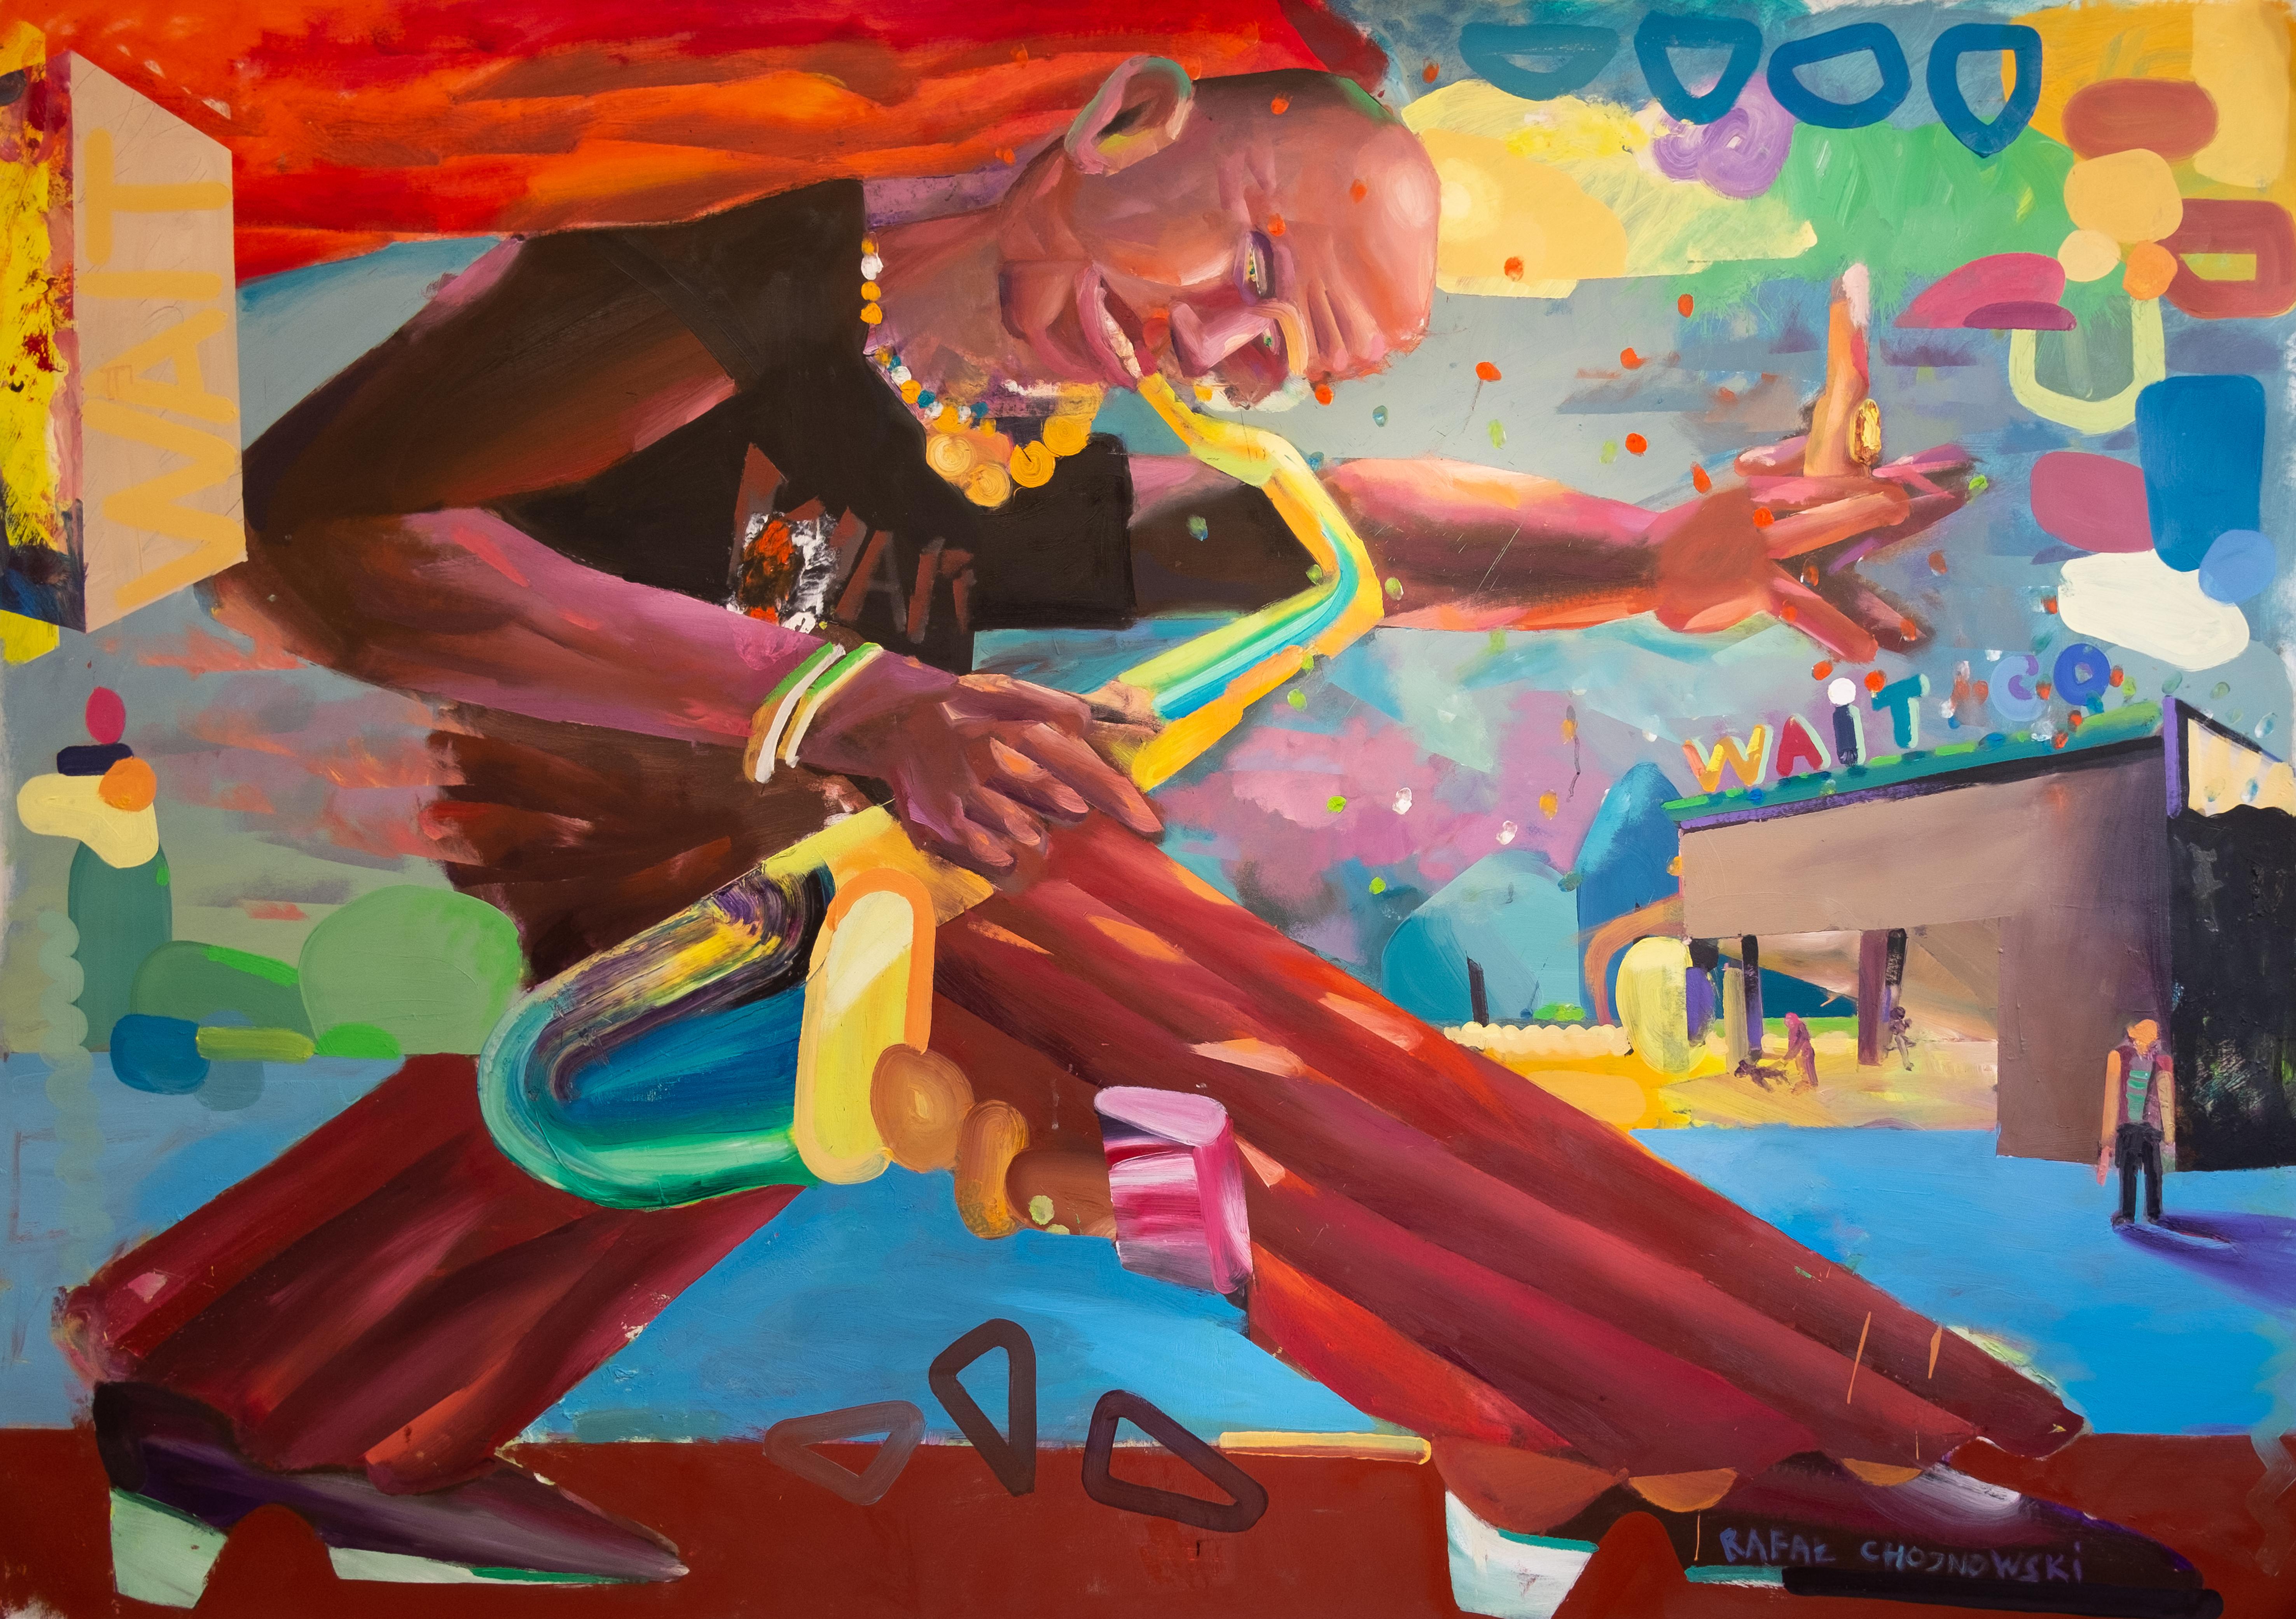 Rafal Chojnowski Portrait Painting - Wait  - Large Format - Contemporary Colorful Figurative Expressionism Painting